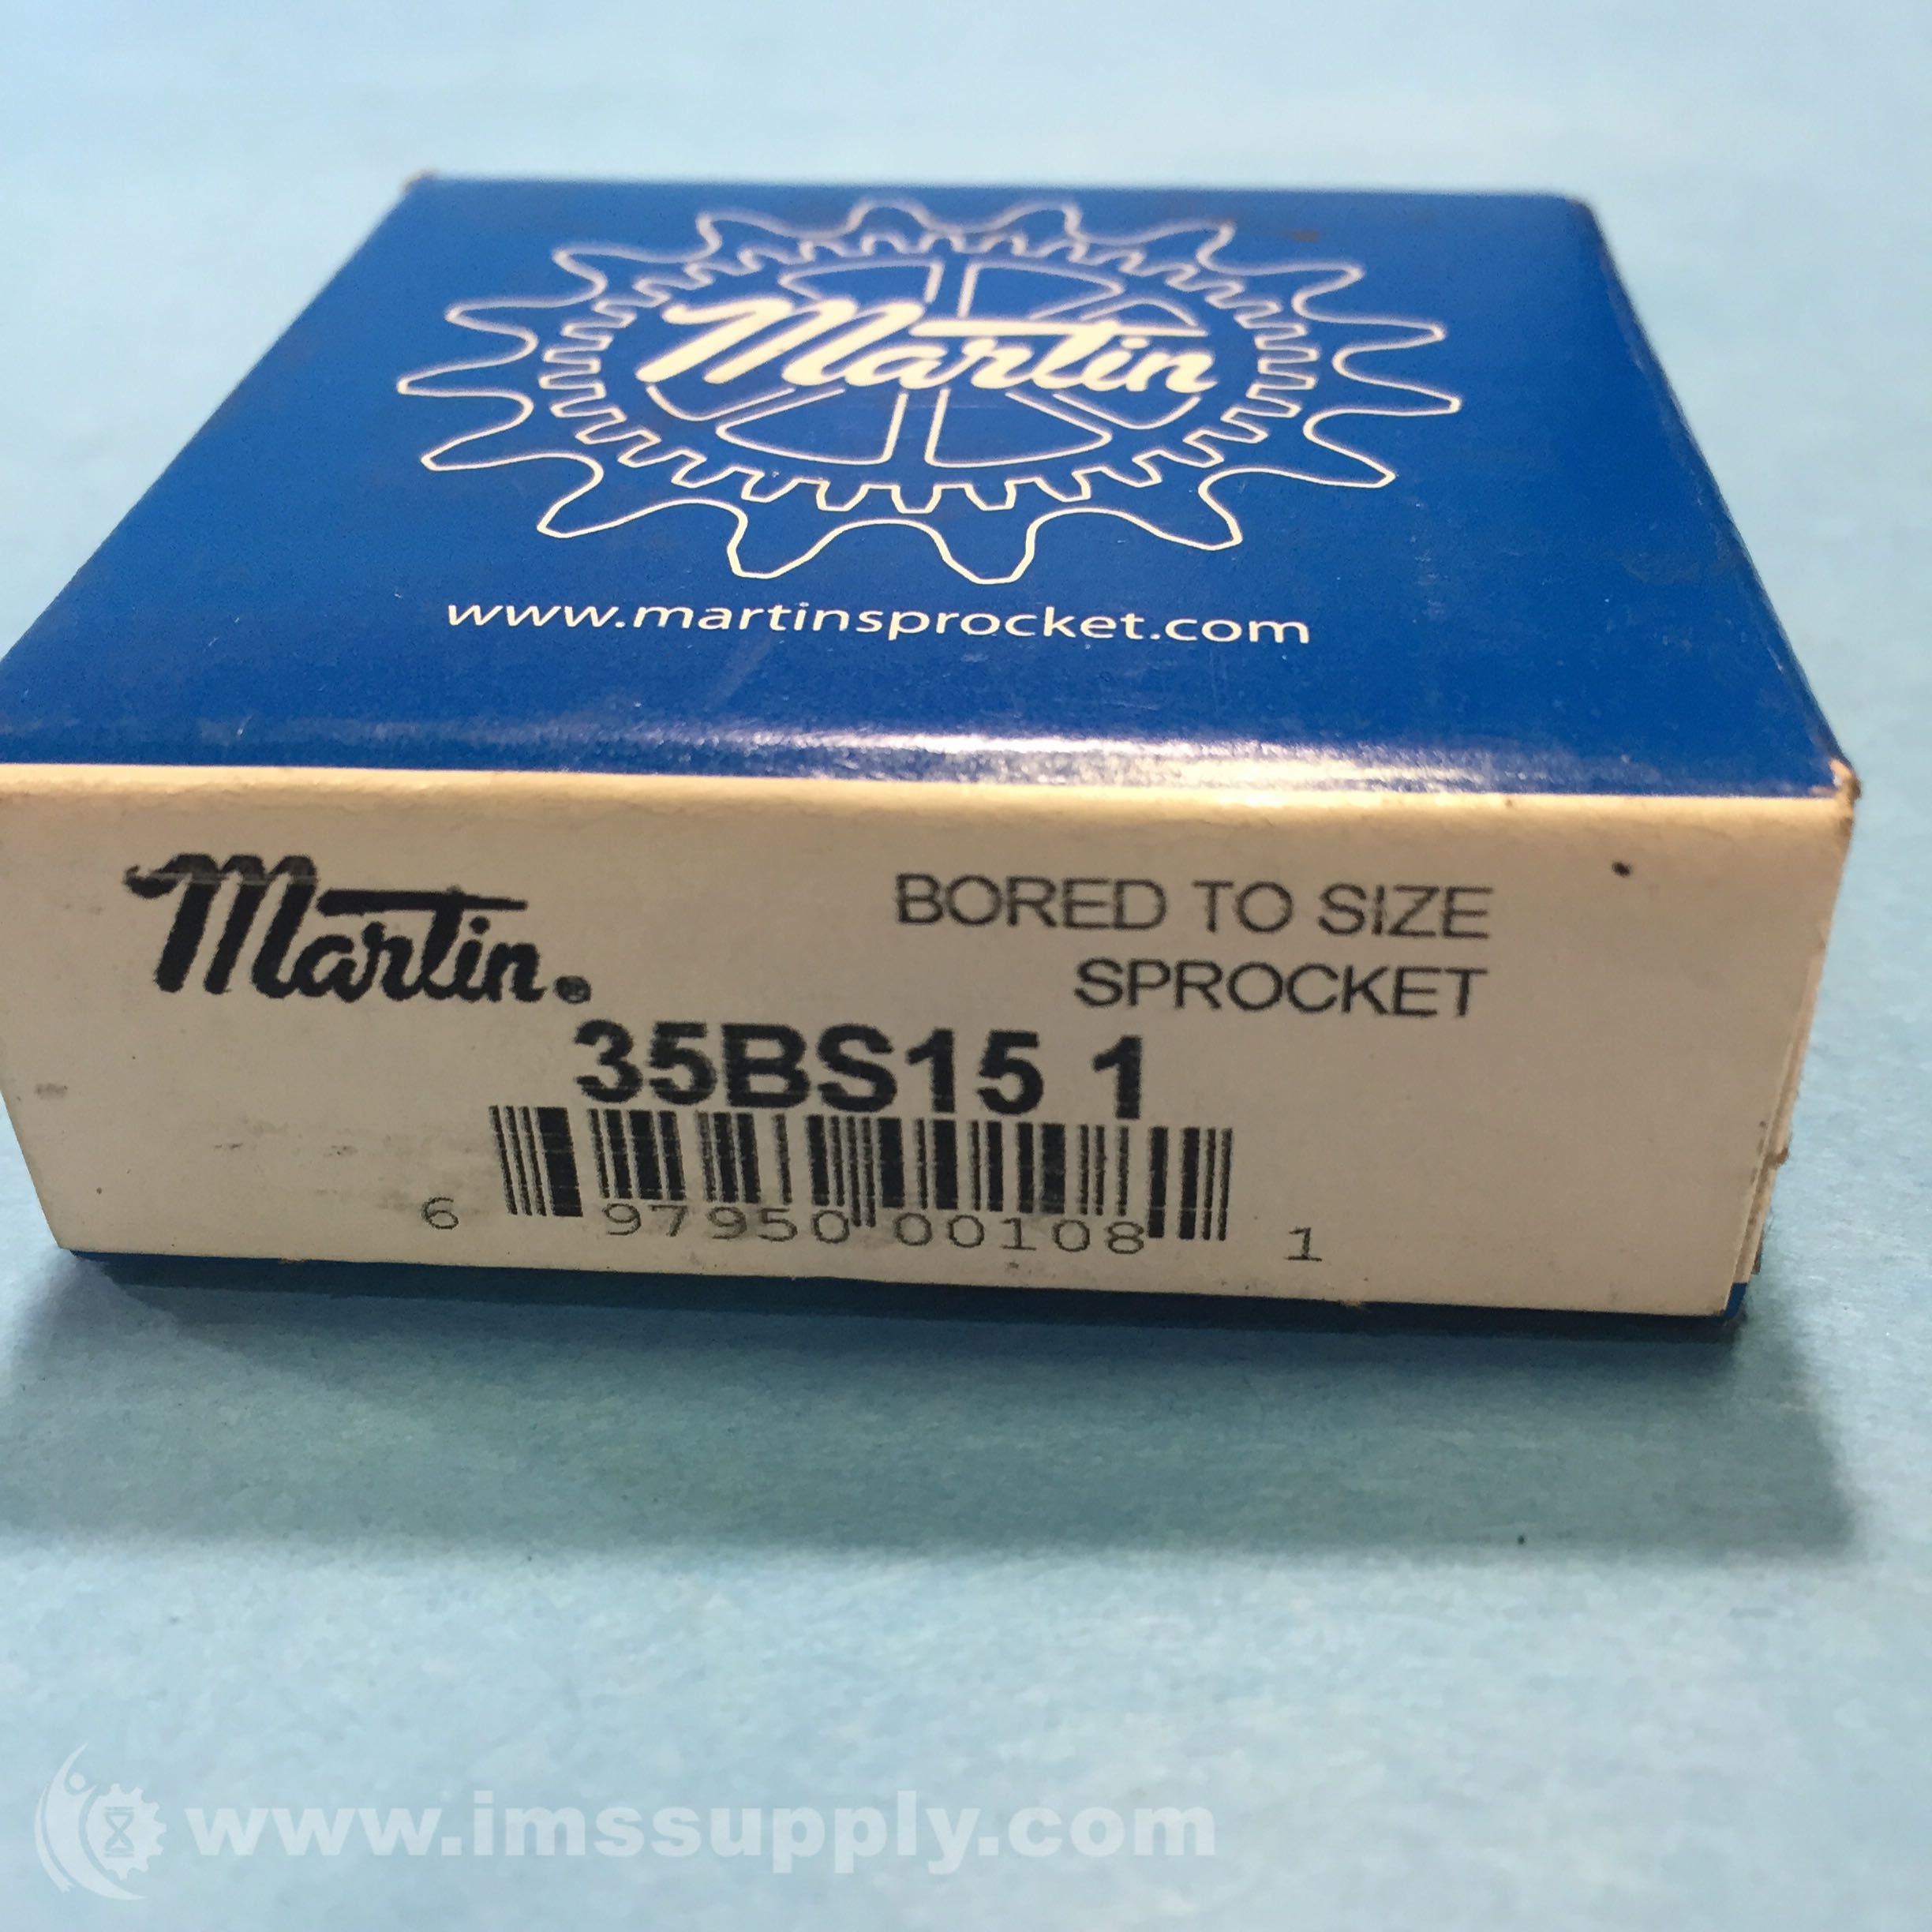 NEW IN BOX S1648 MARTIN SPROCKET & GEAR INC S1648 